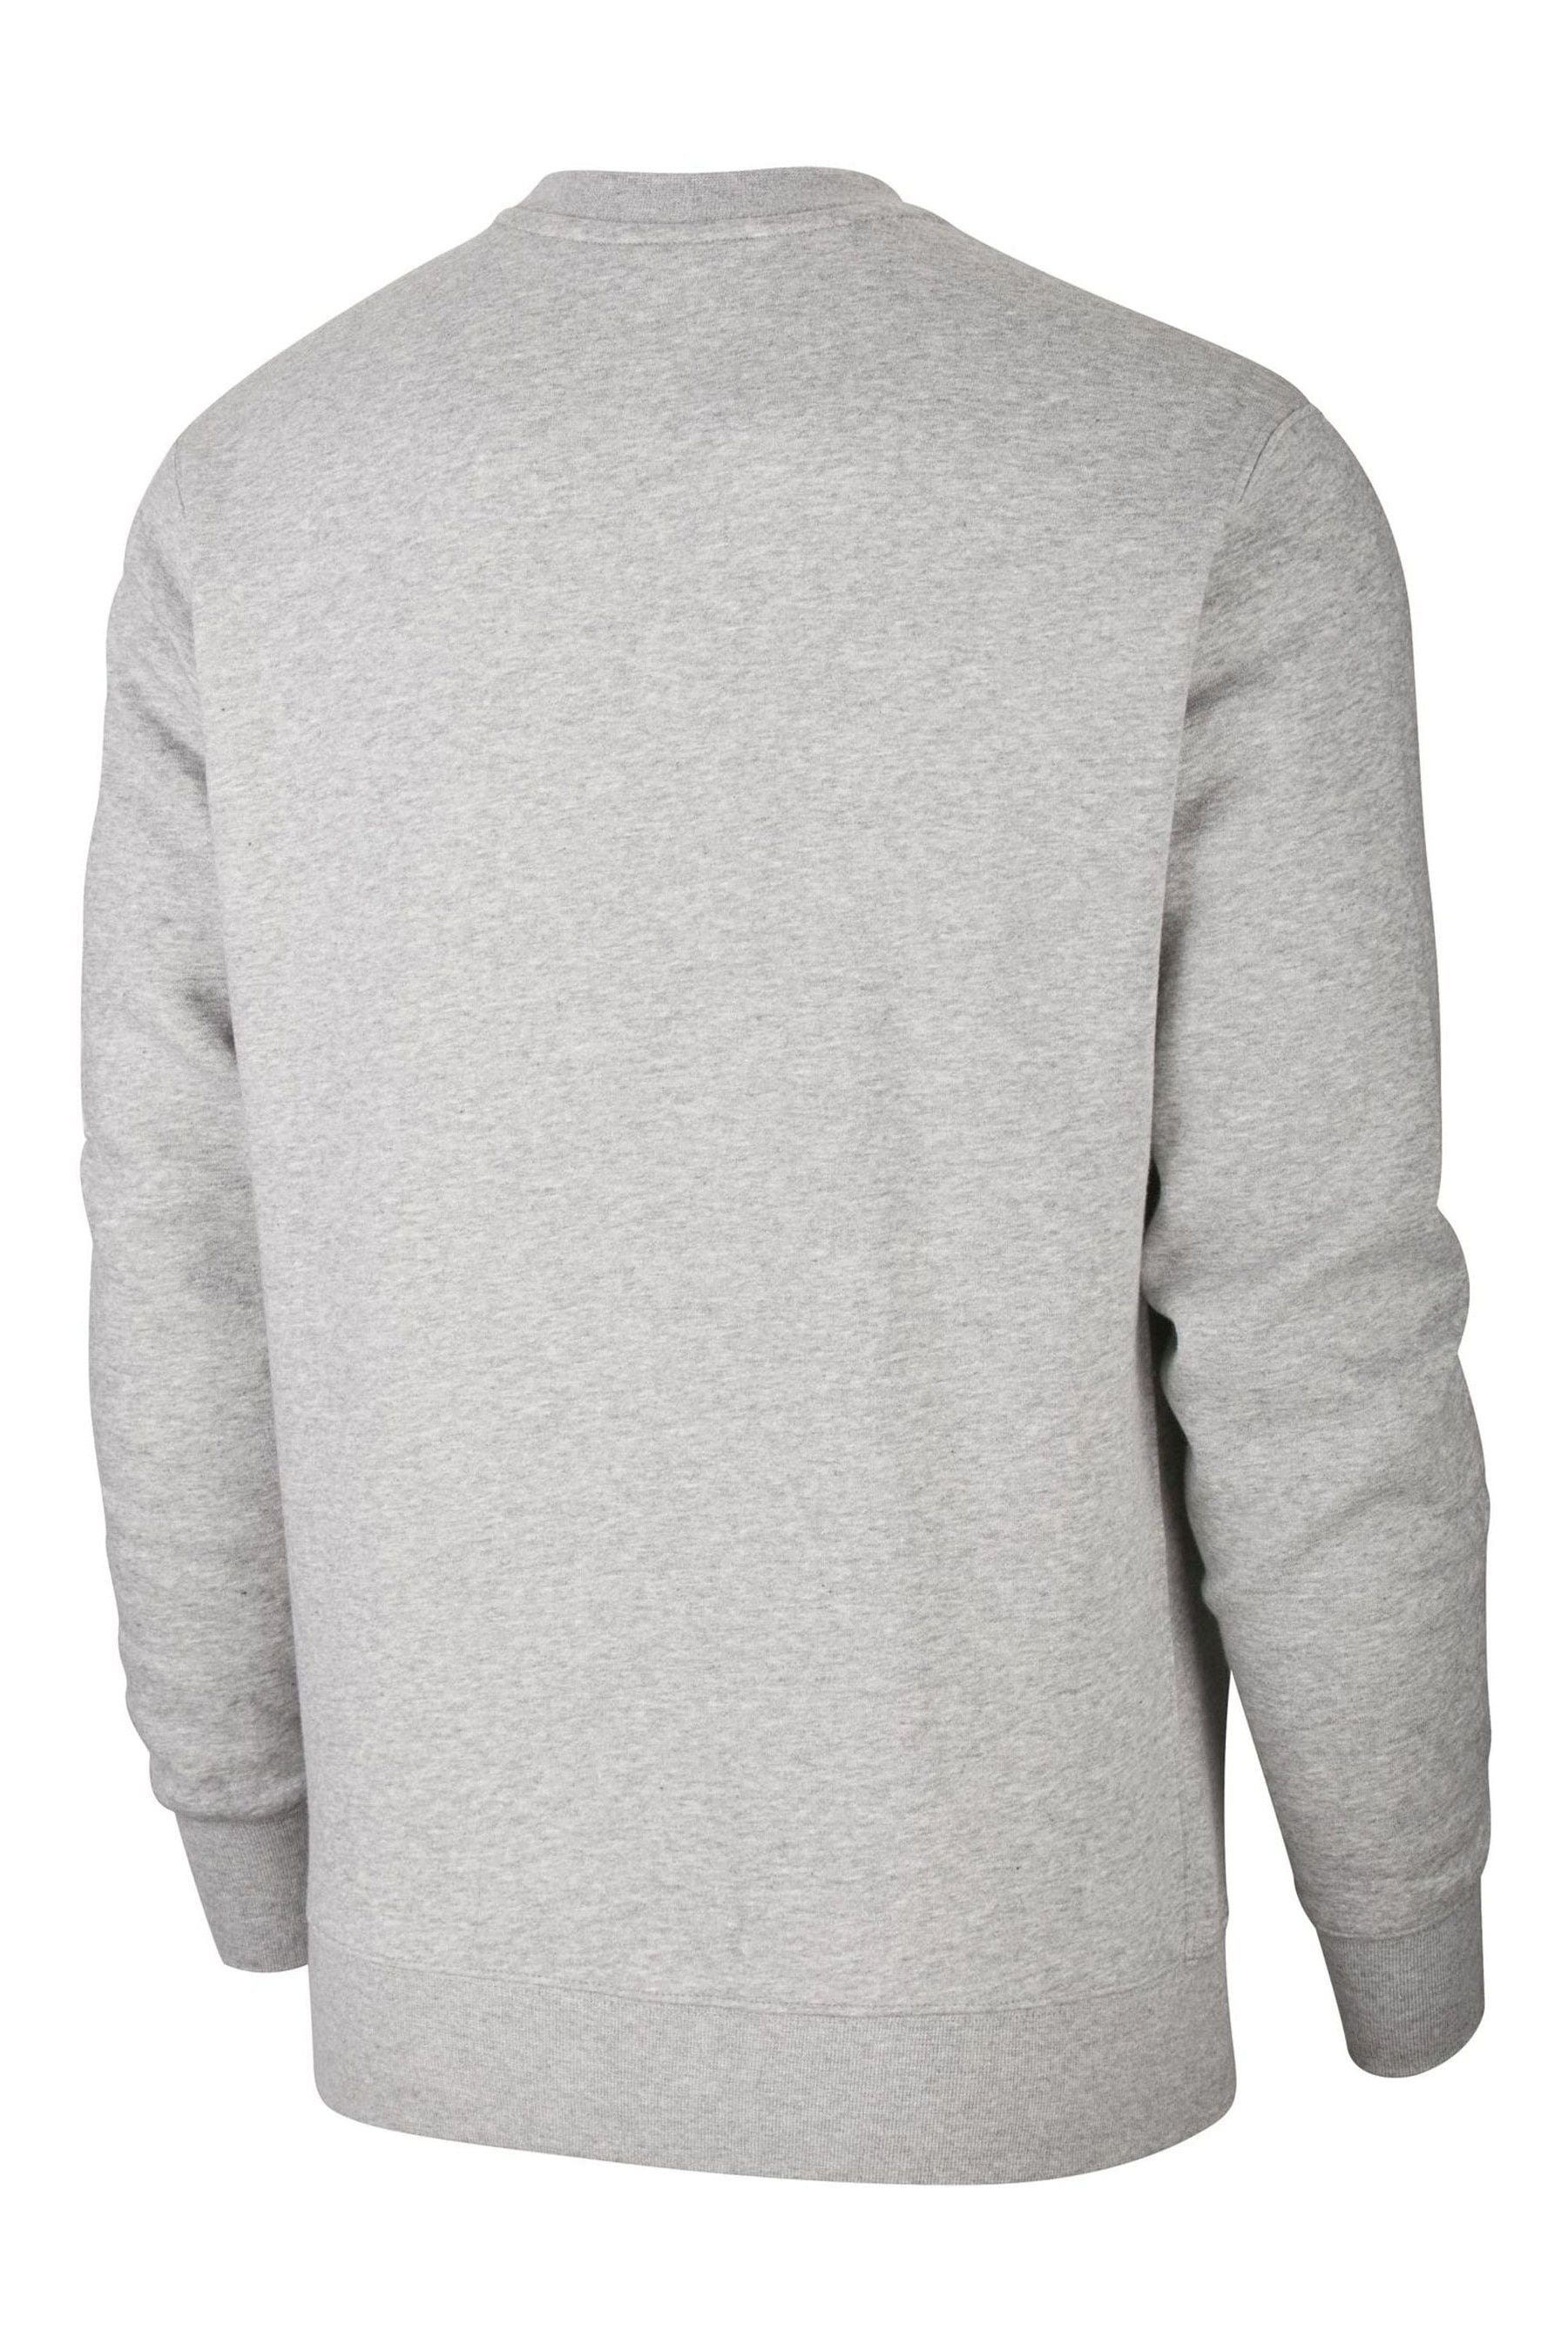 Buy Nike Club Crew Sweatshirt from the Next UK online shop